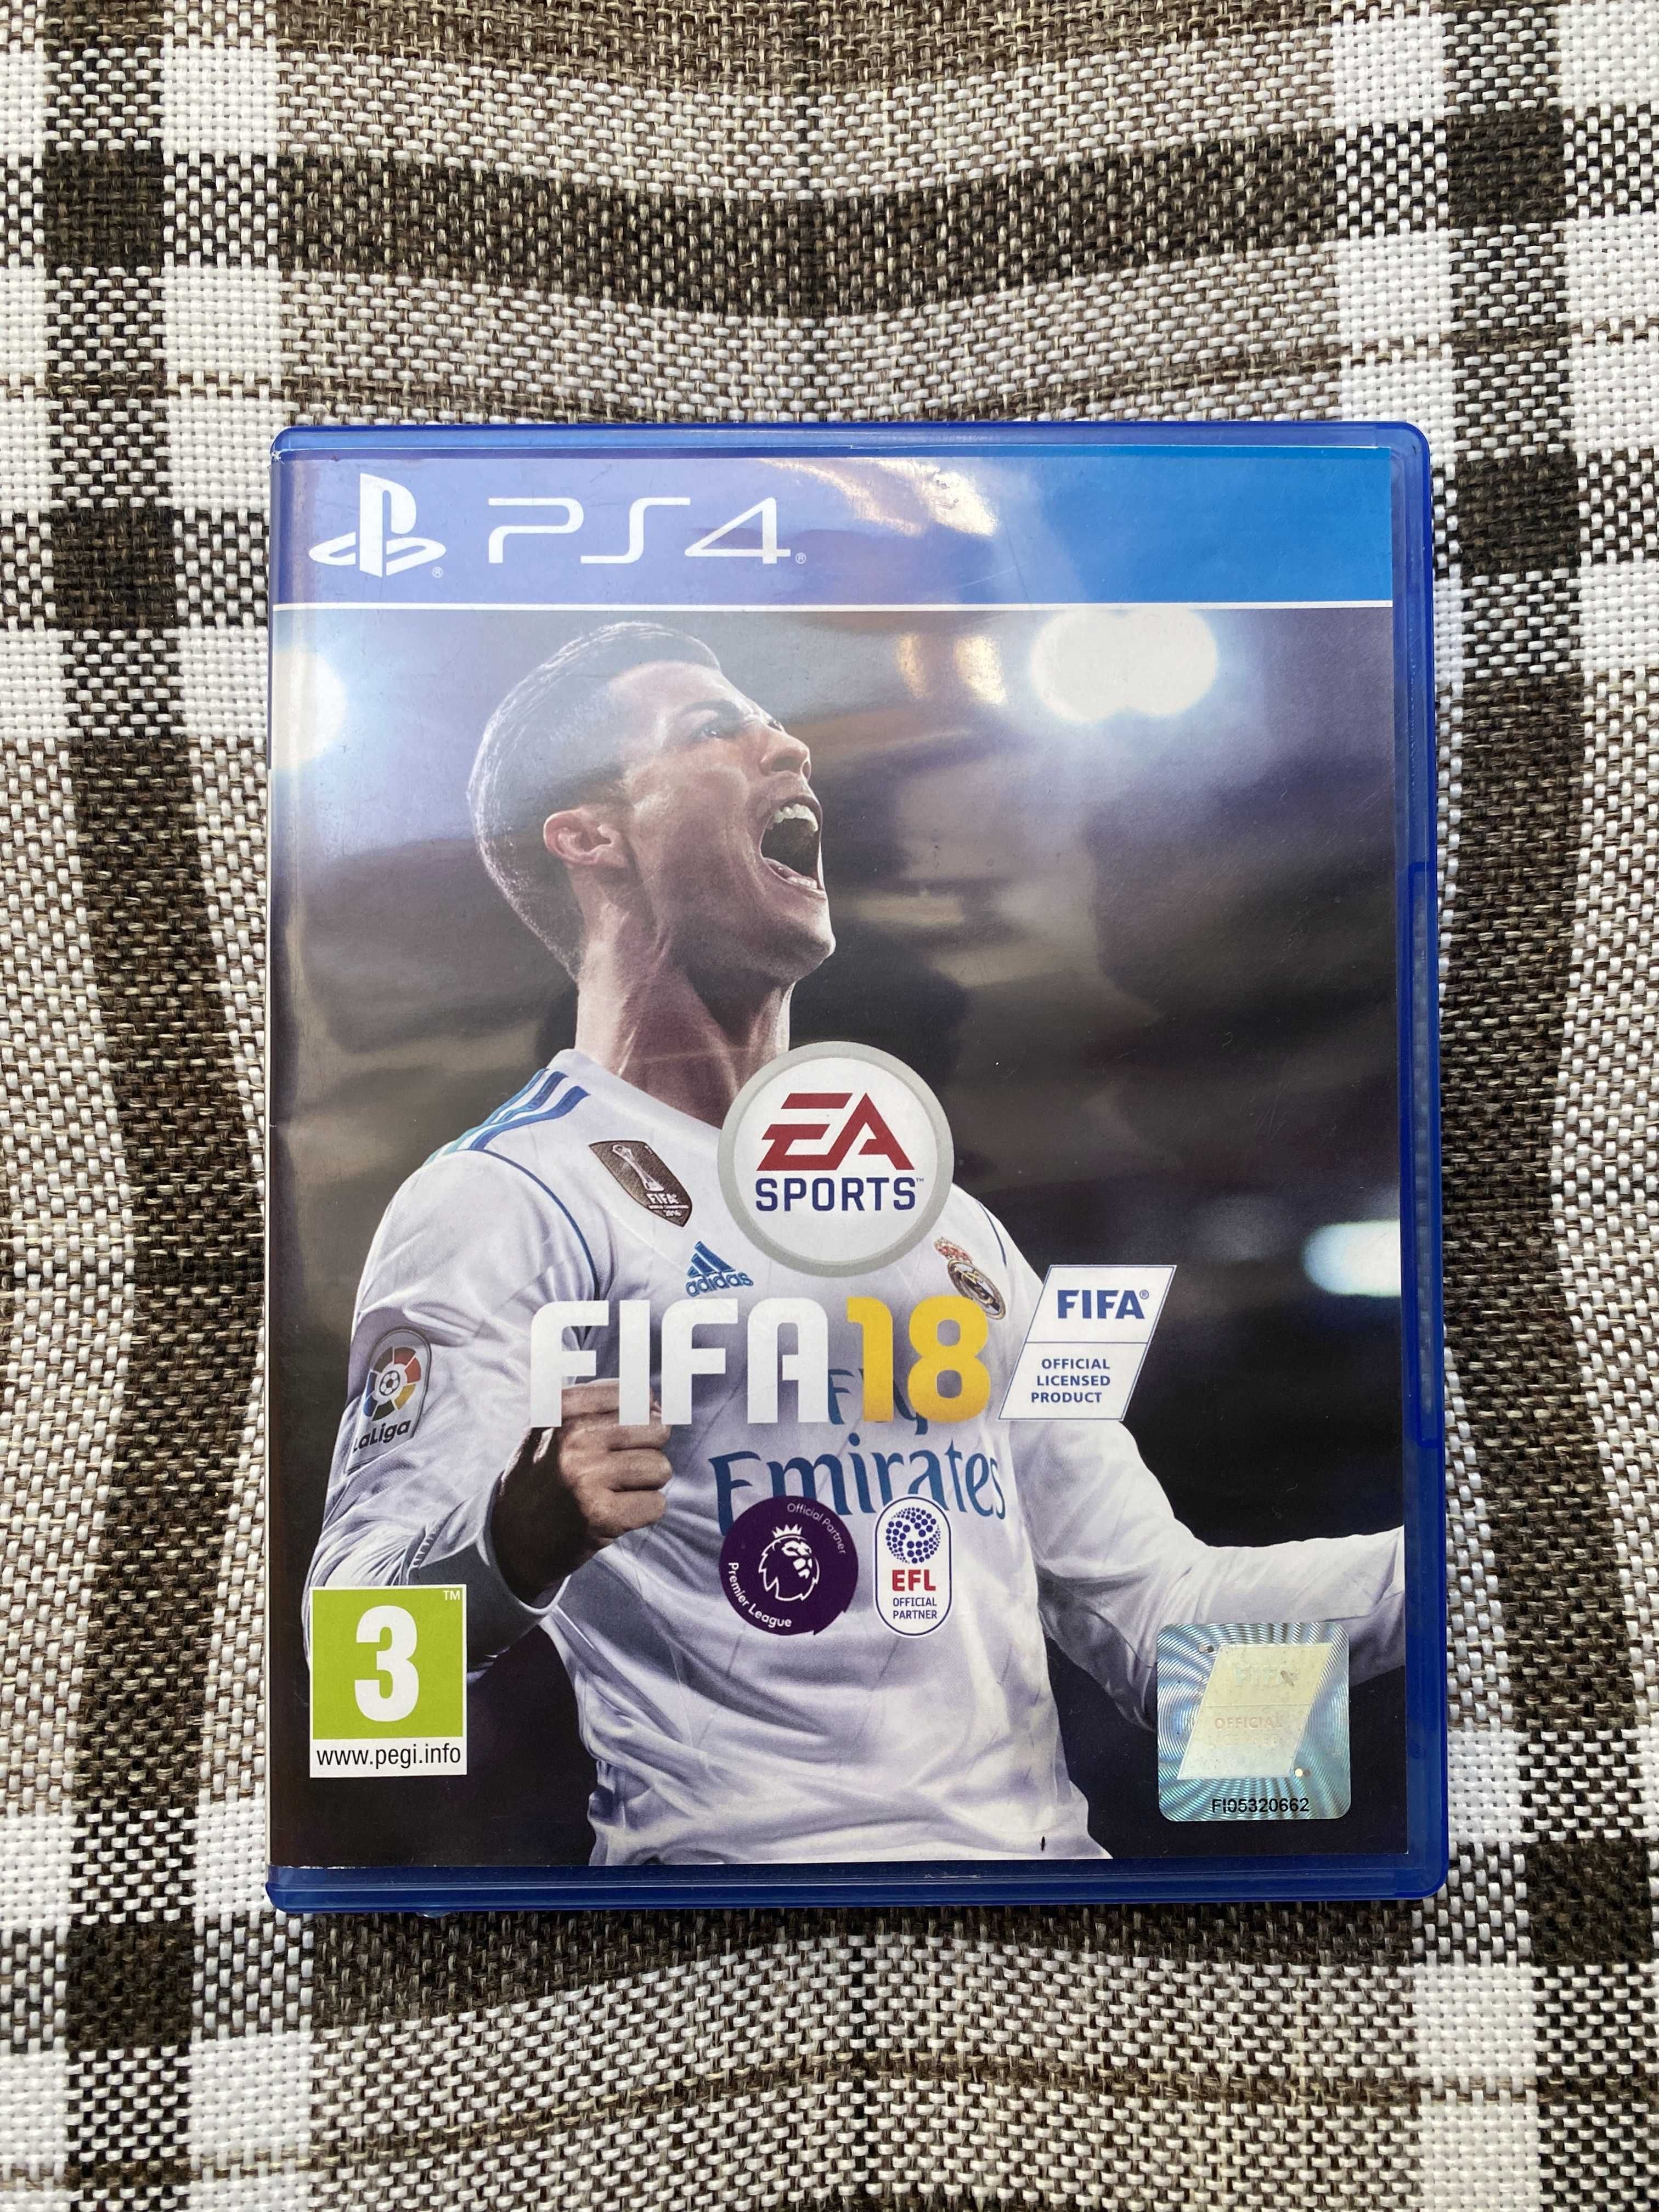 PS4 konsola Fifa 18 gra